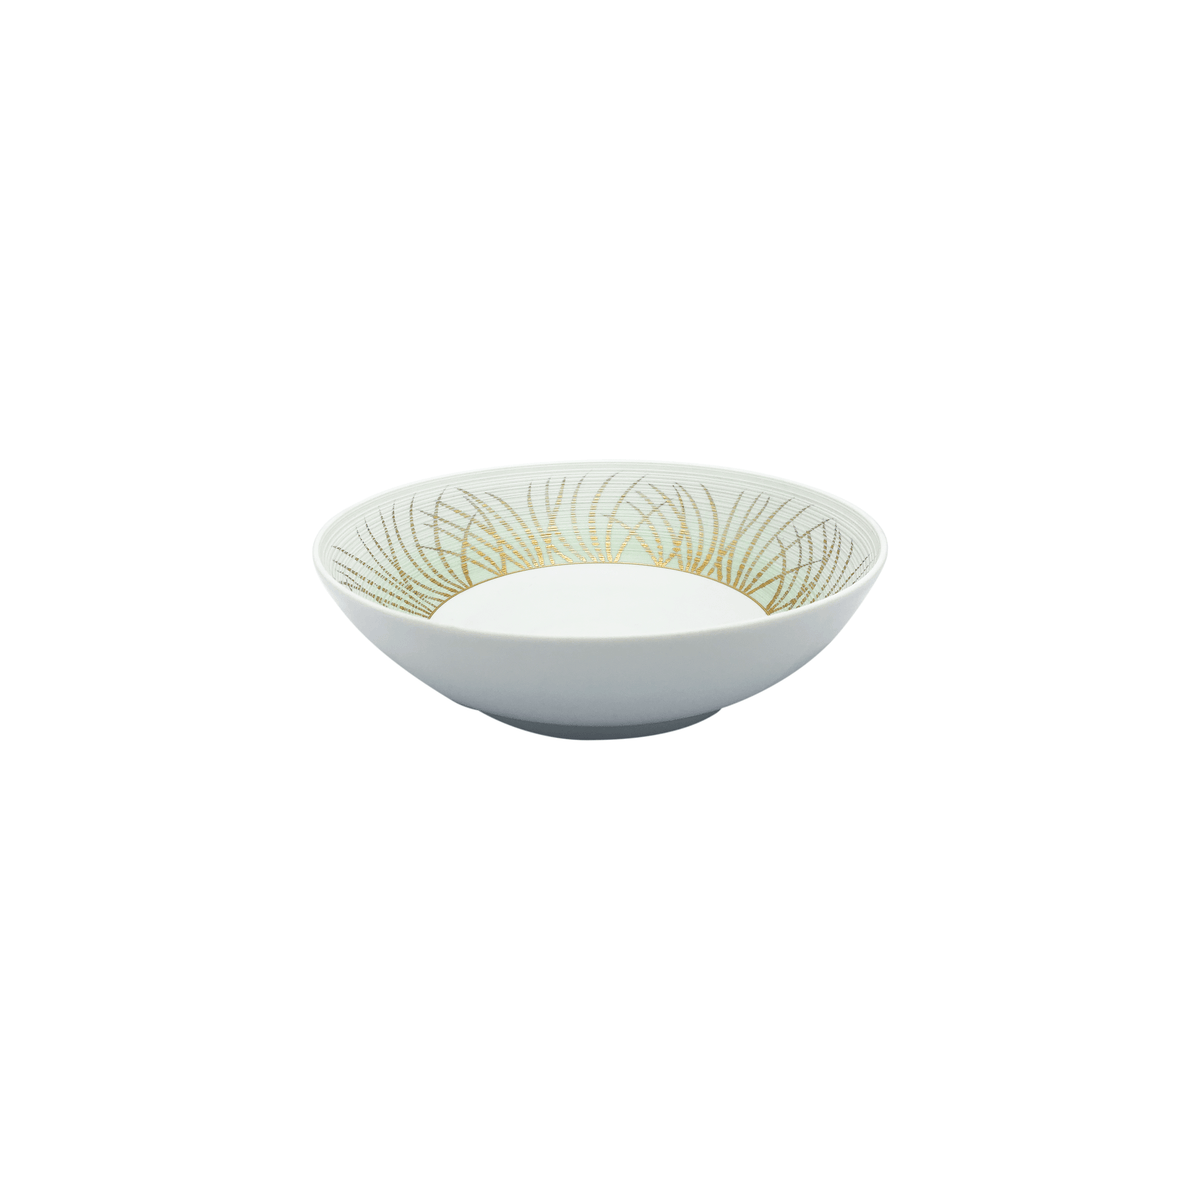 HEMISPHERE Toundra Spring - GM salad bowl